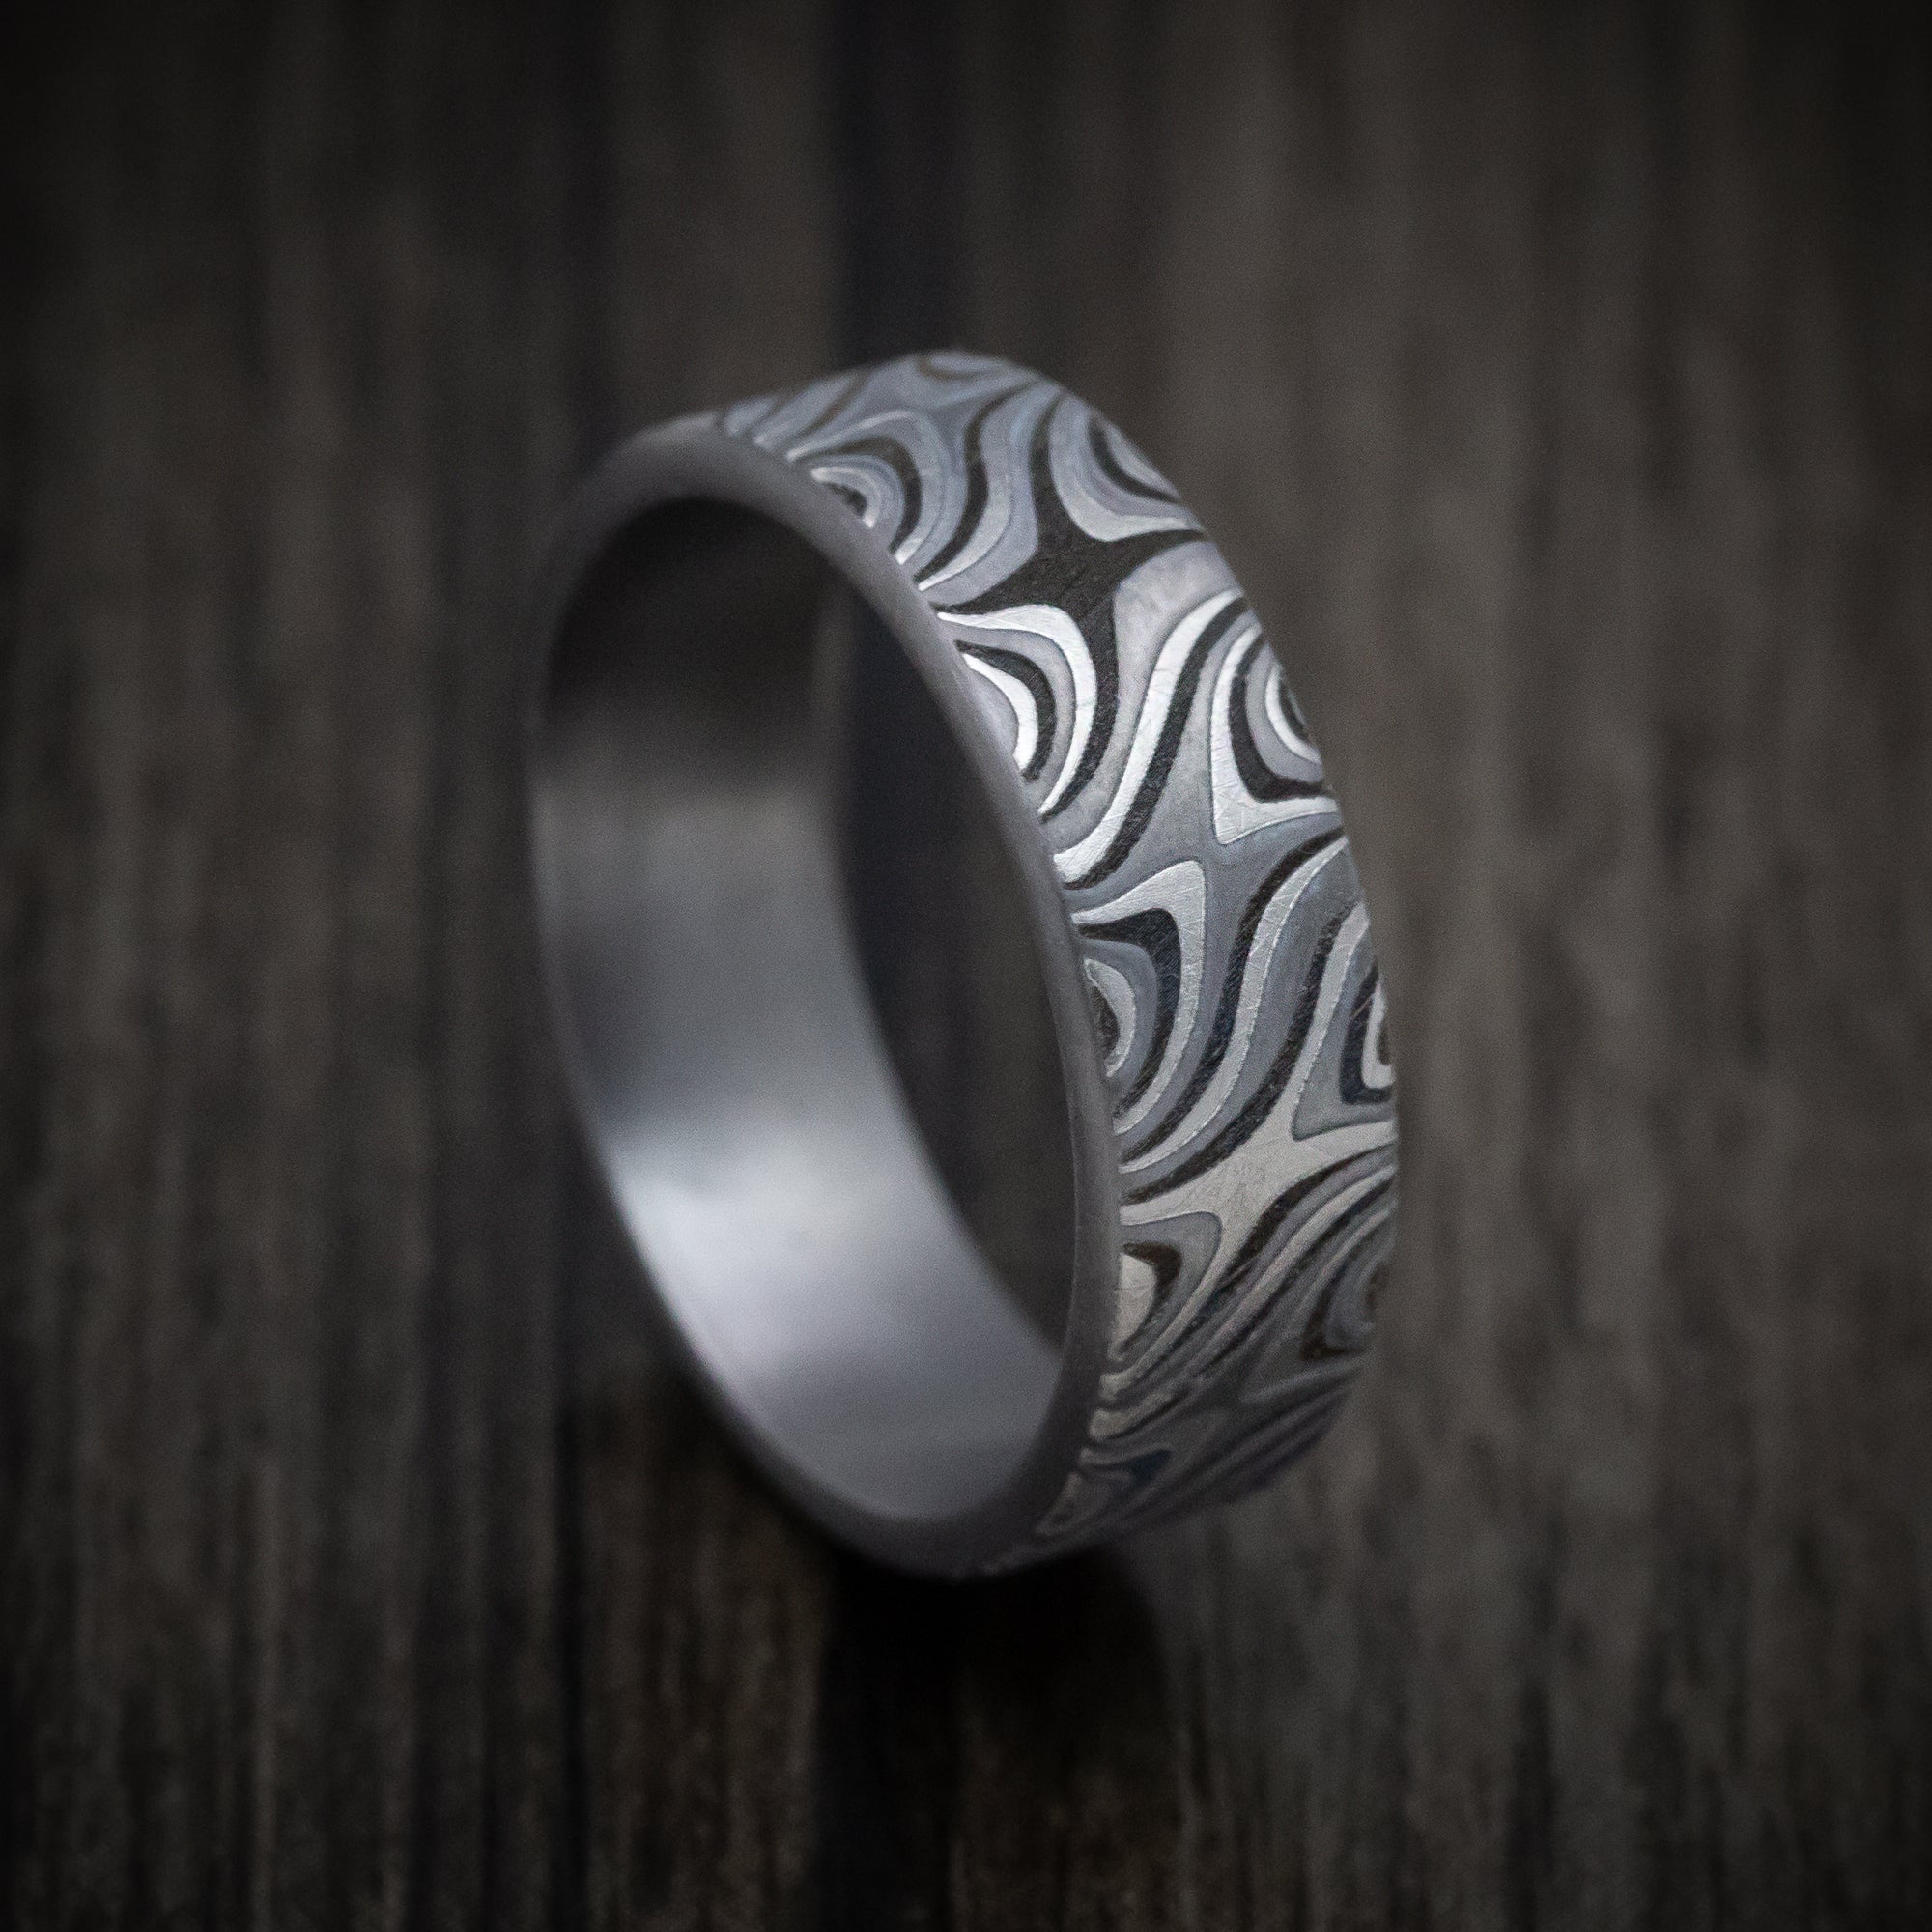 Steel Star Ring, Star motif ring, surgical steel